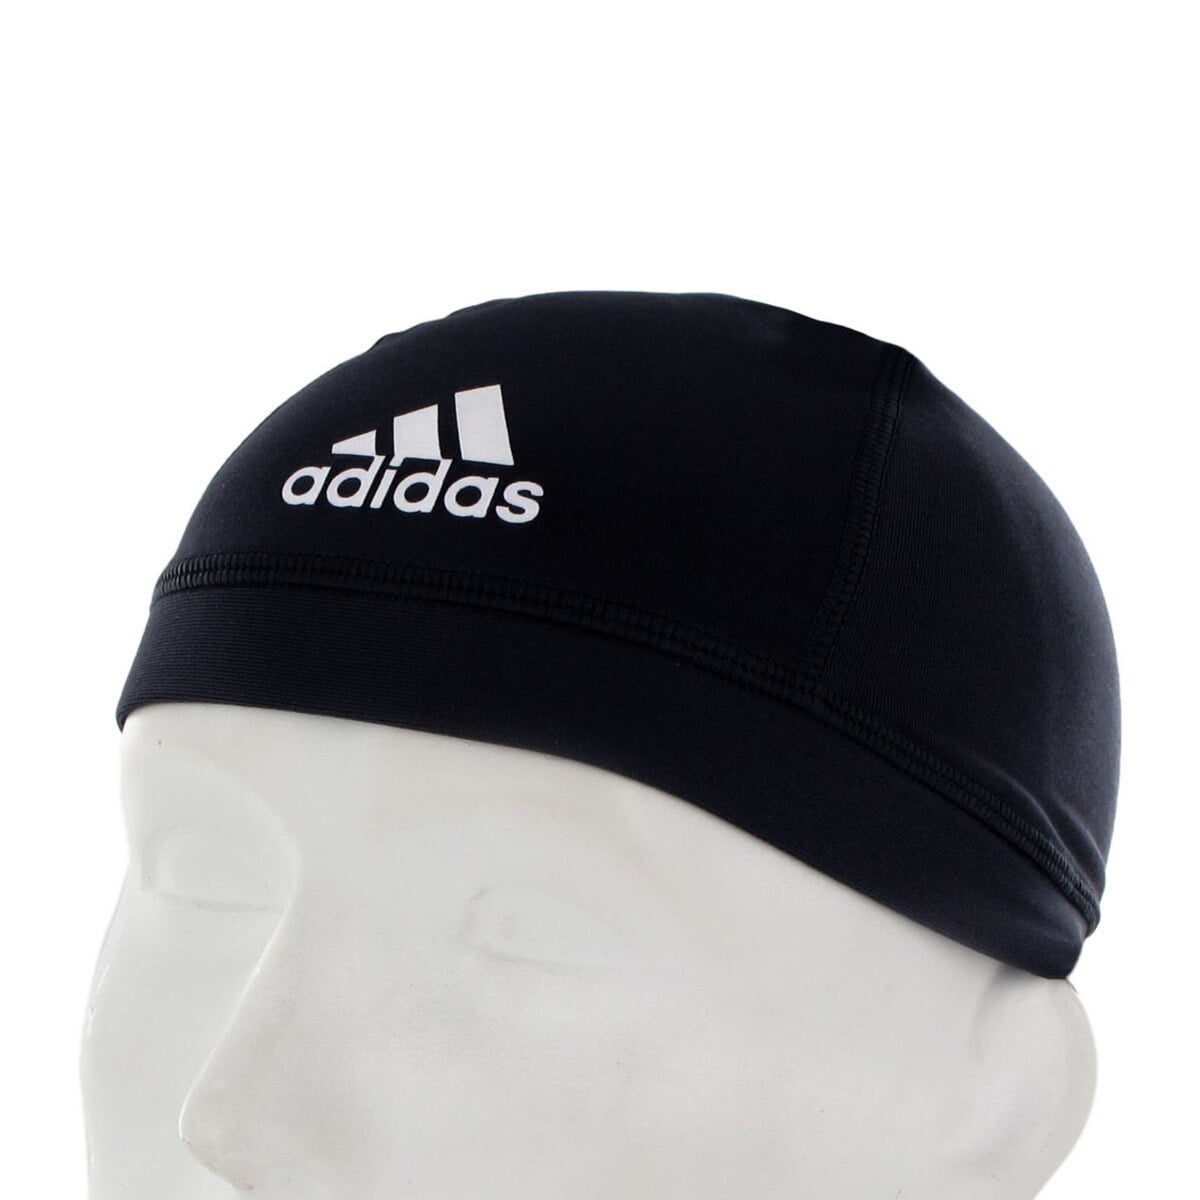 adidas money football headband